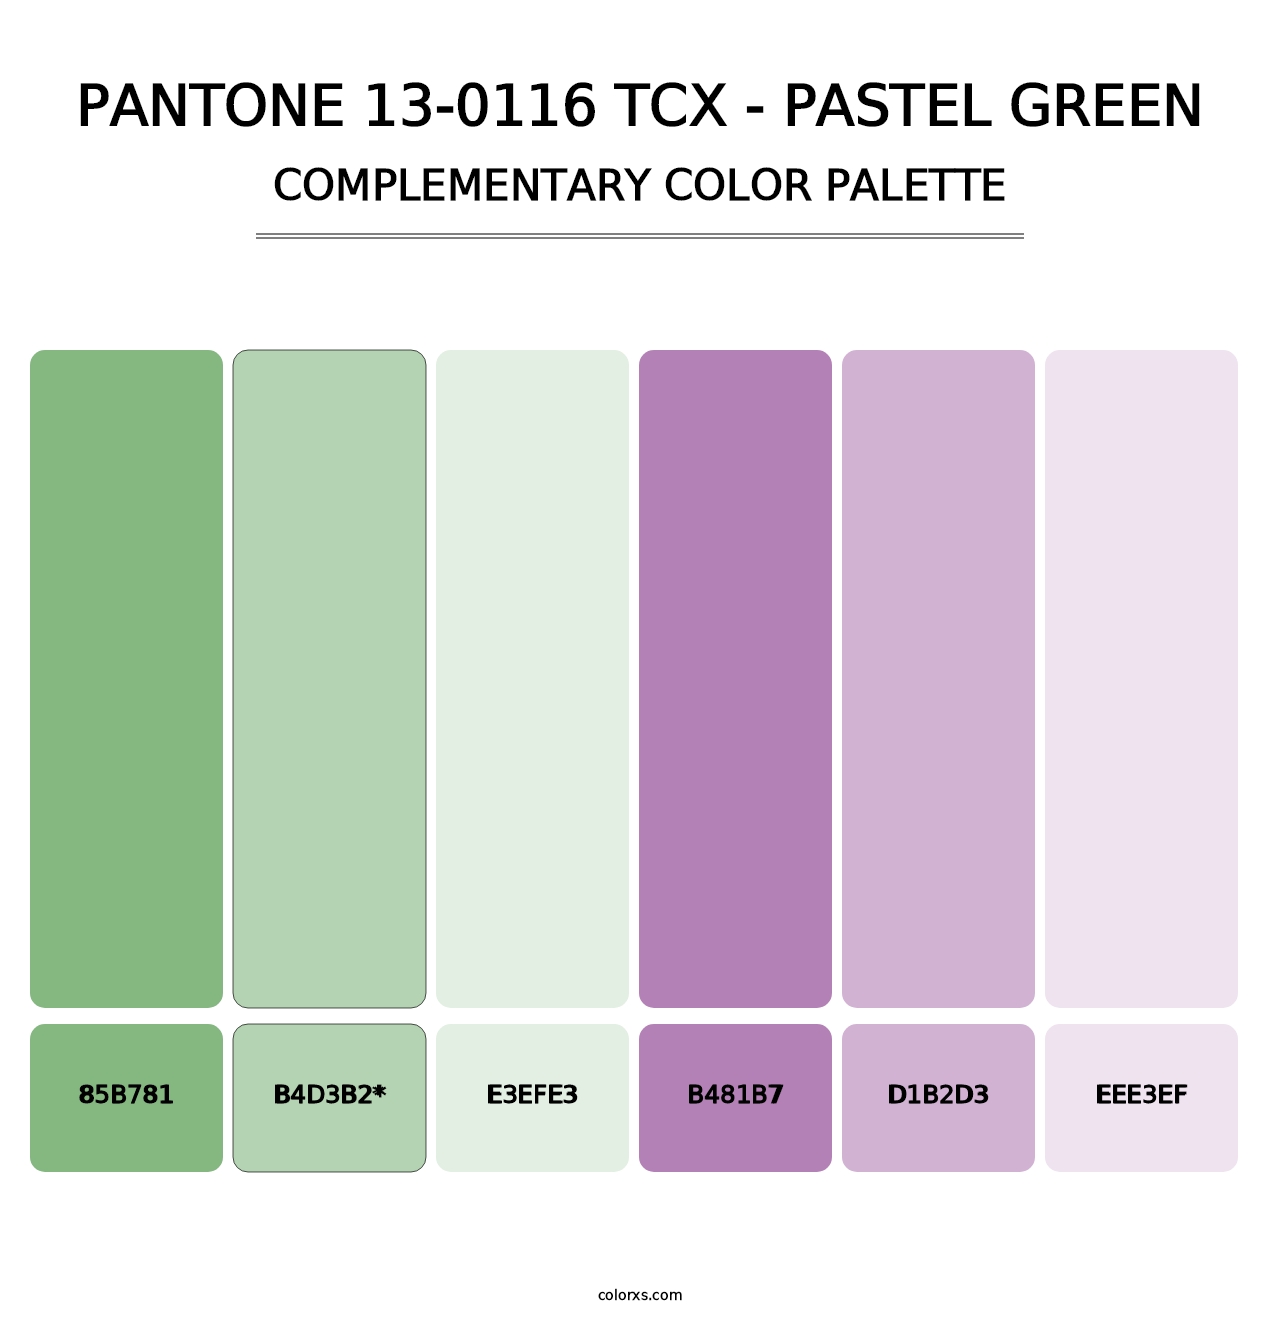 PANTONE 13-0116 TCX - Pastel Green - Complementary Color Palette